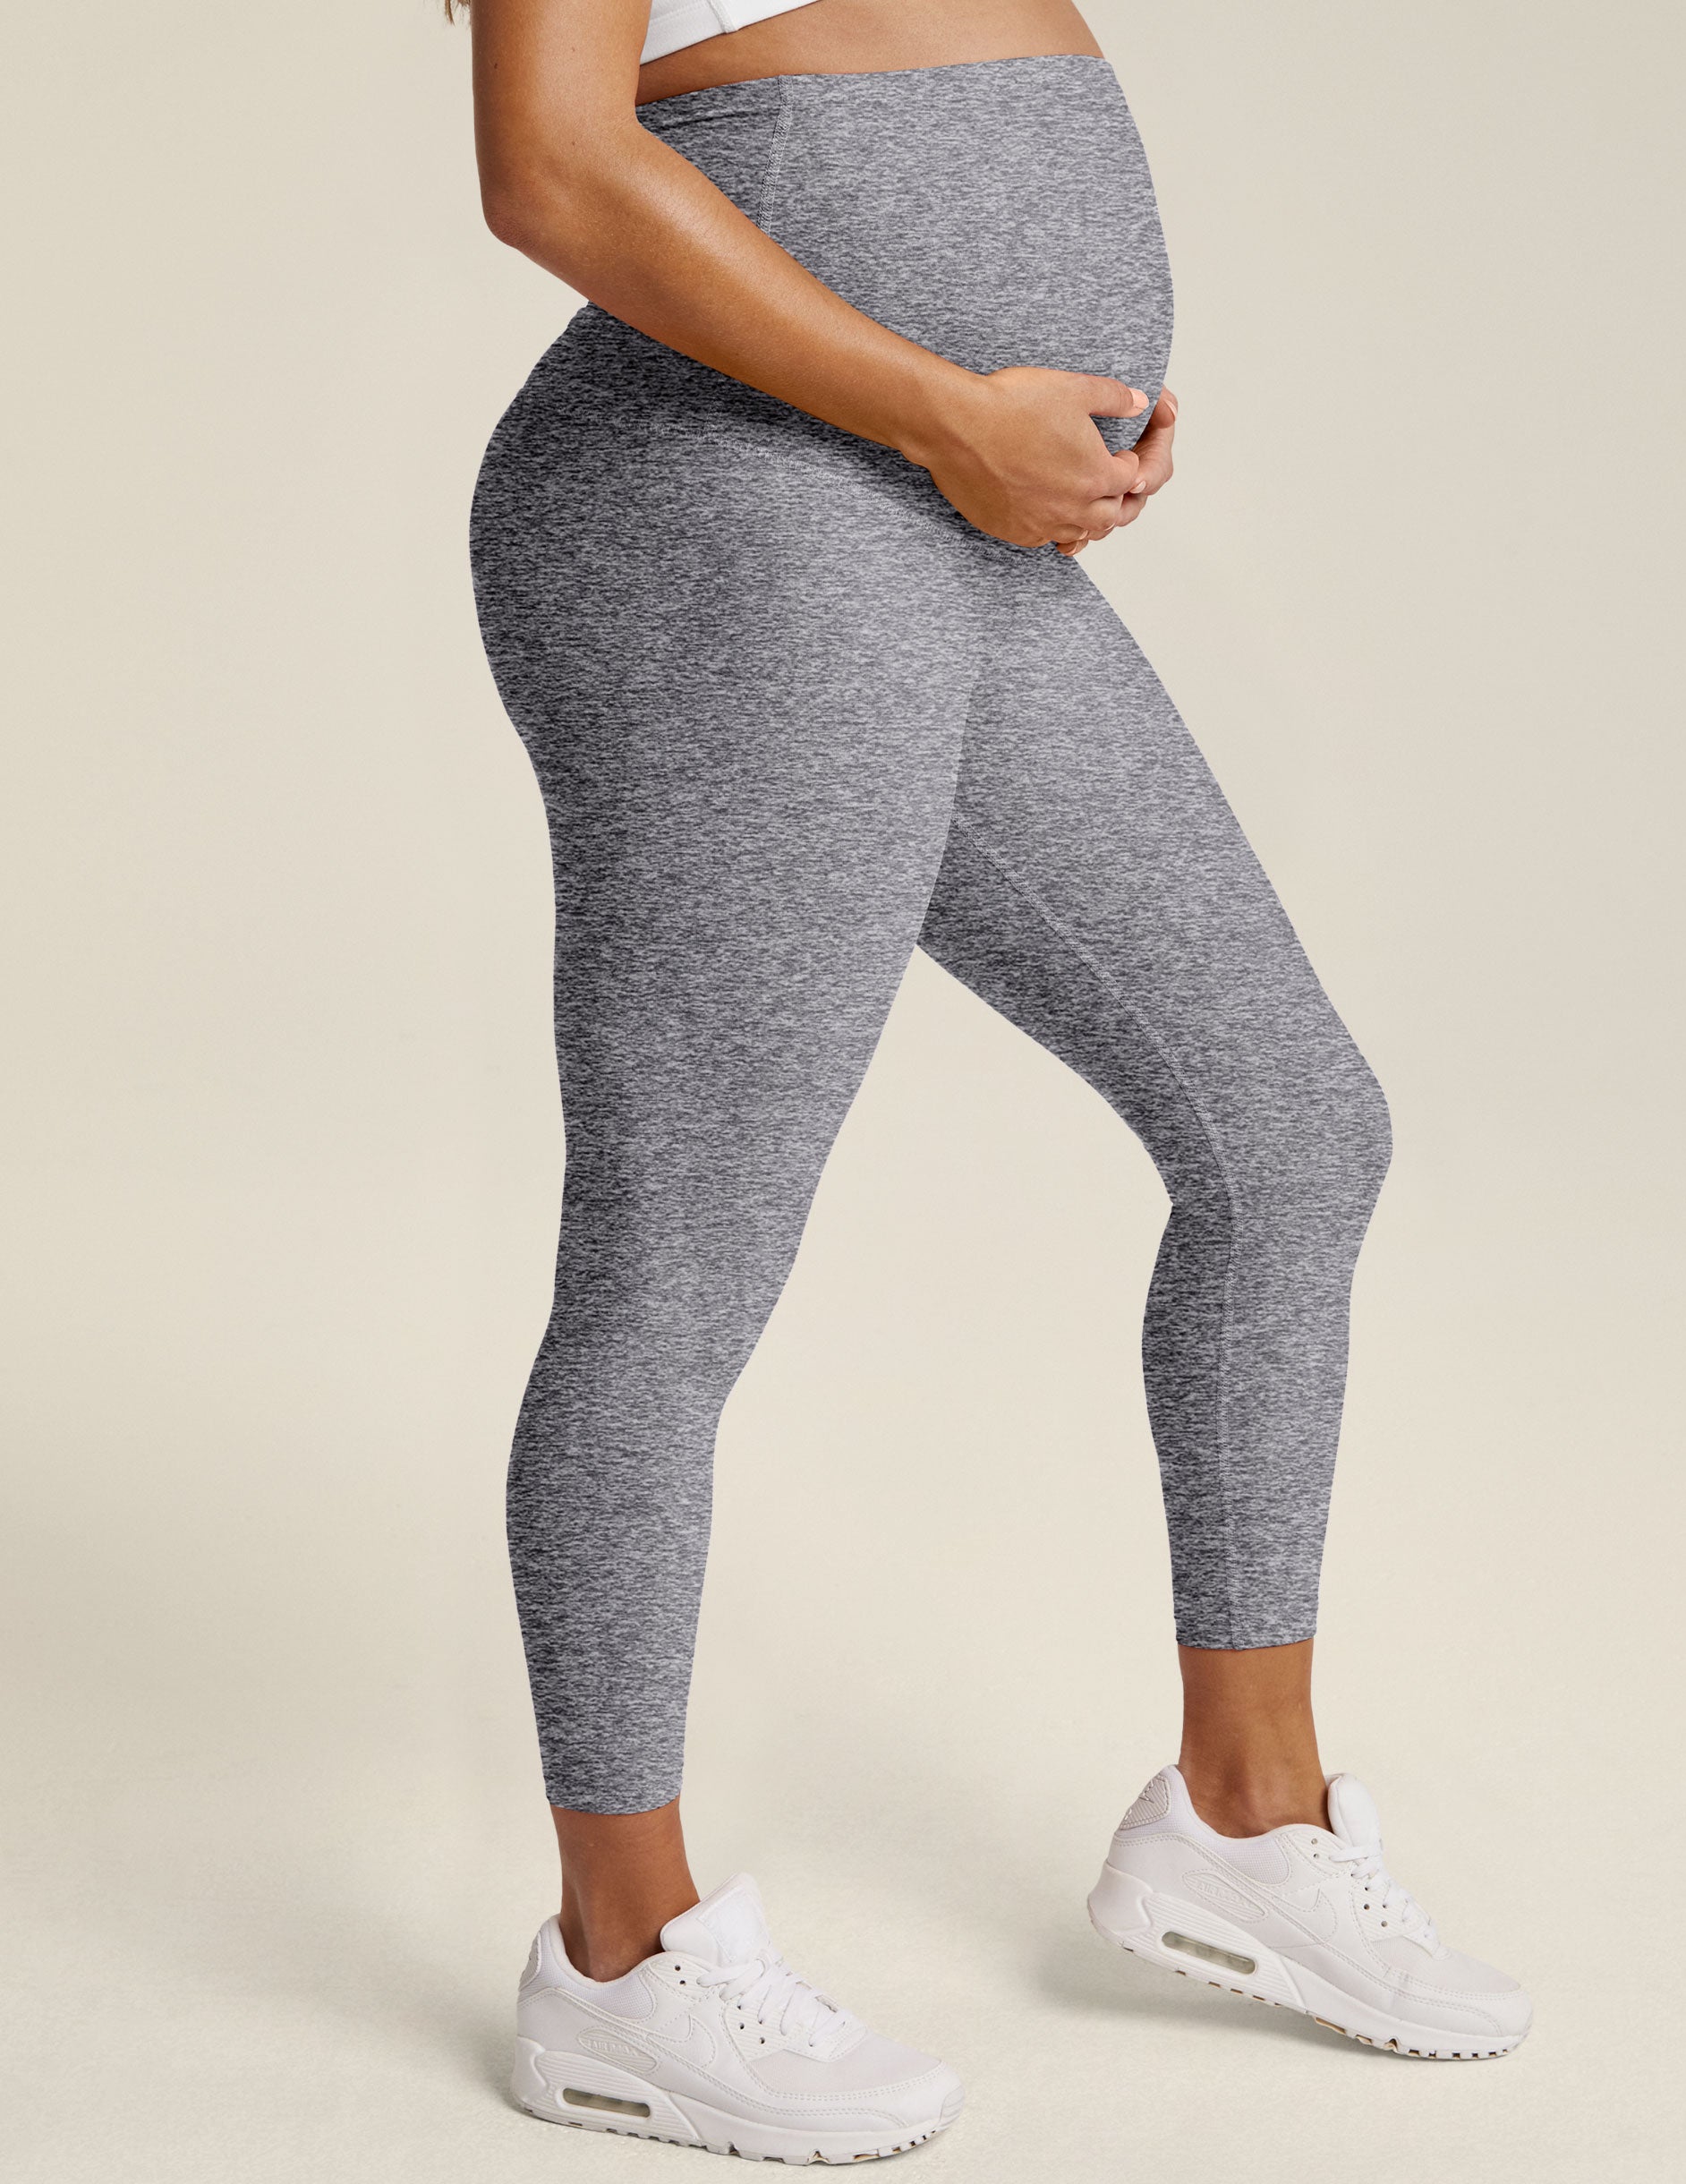 Women's Yoga Capris & Yoga Crop Pants